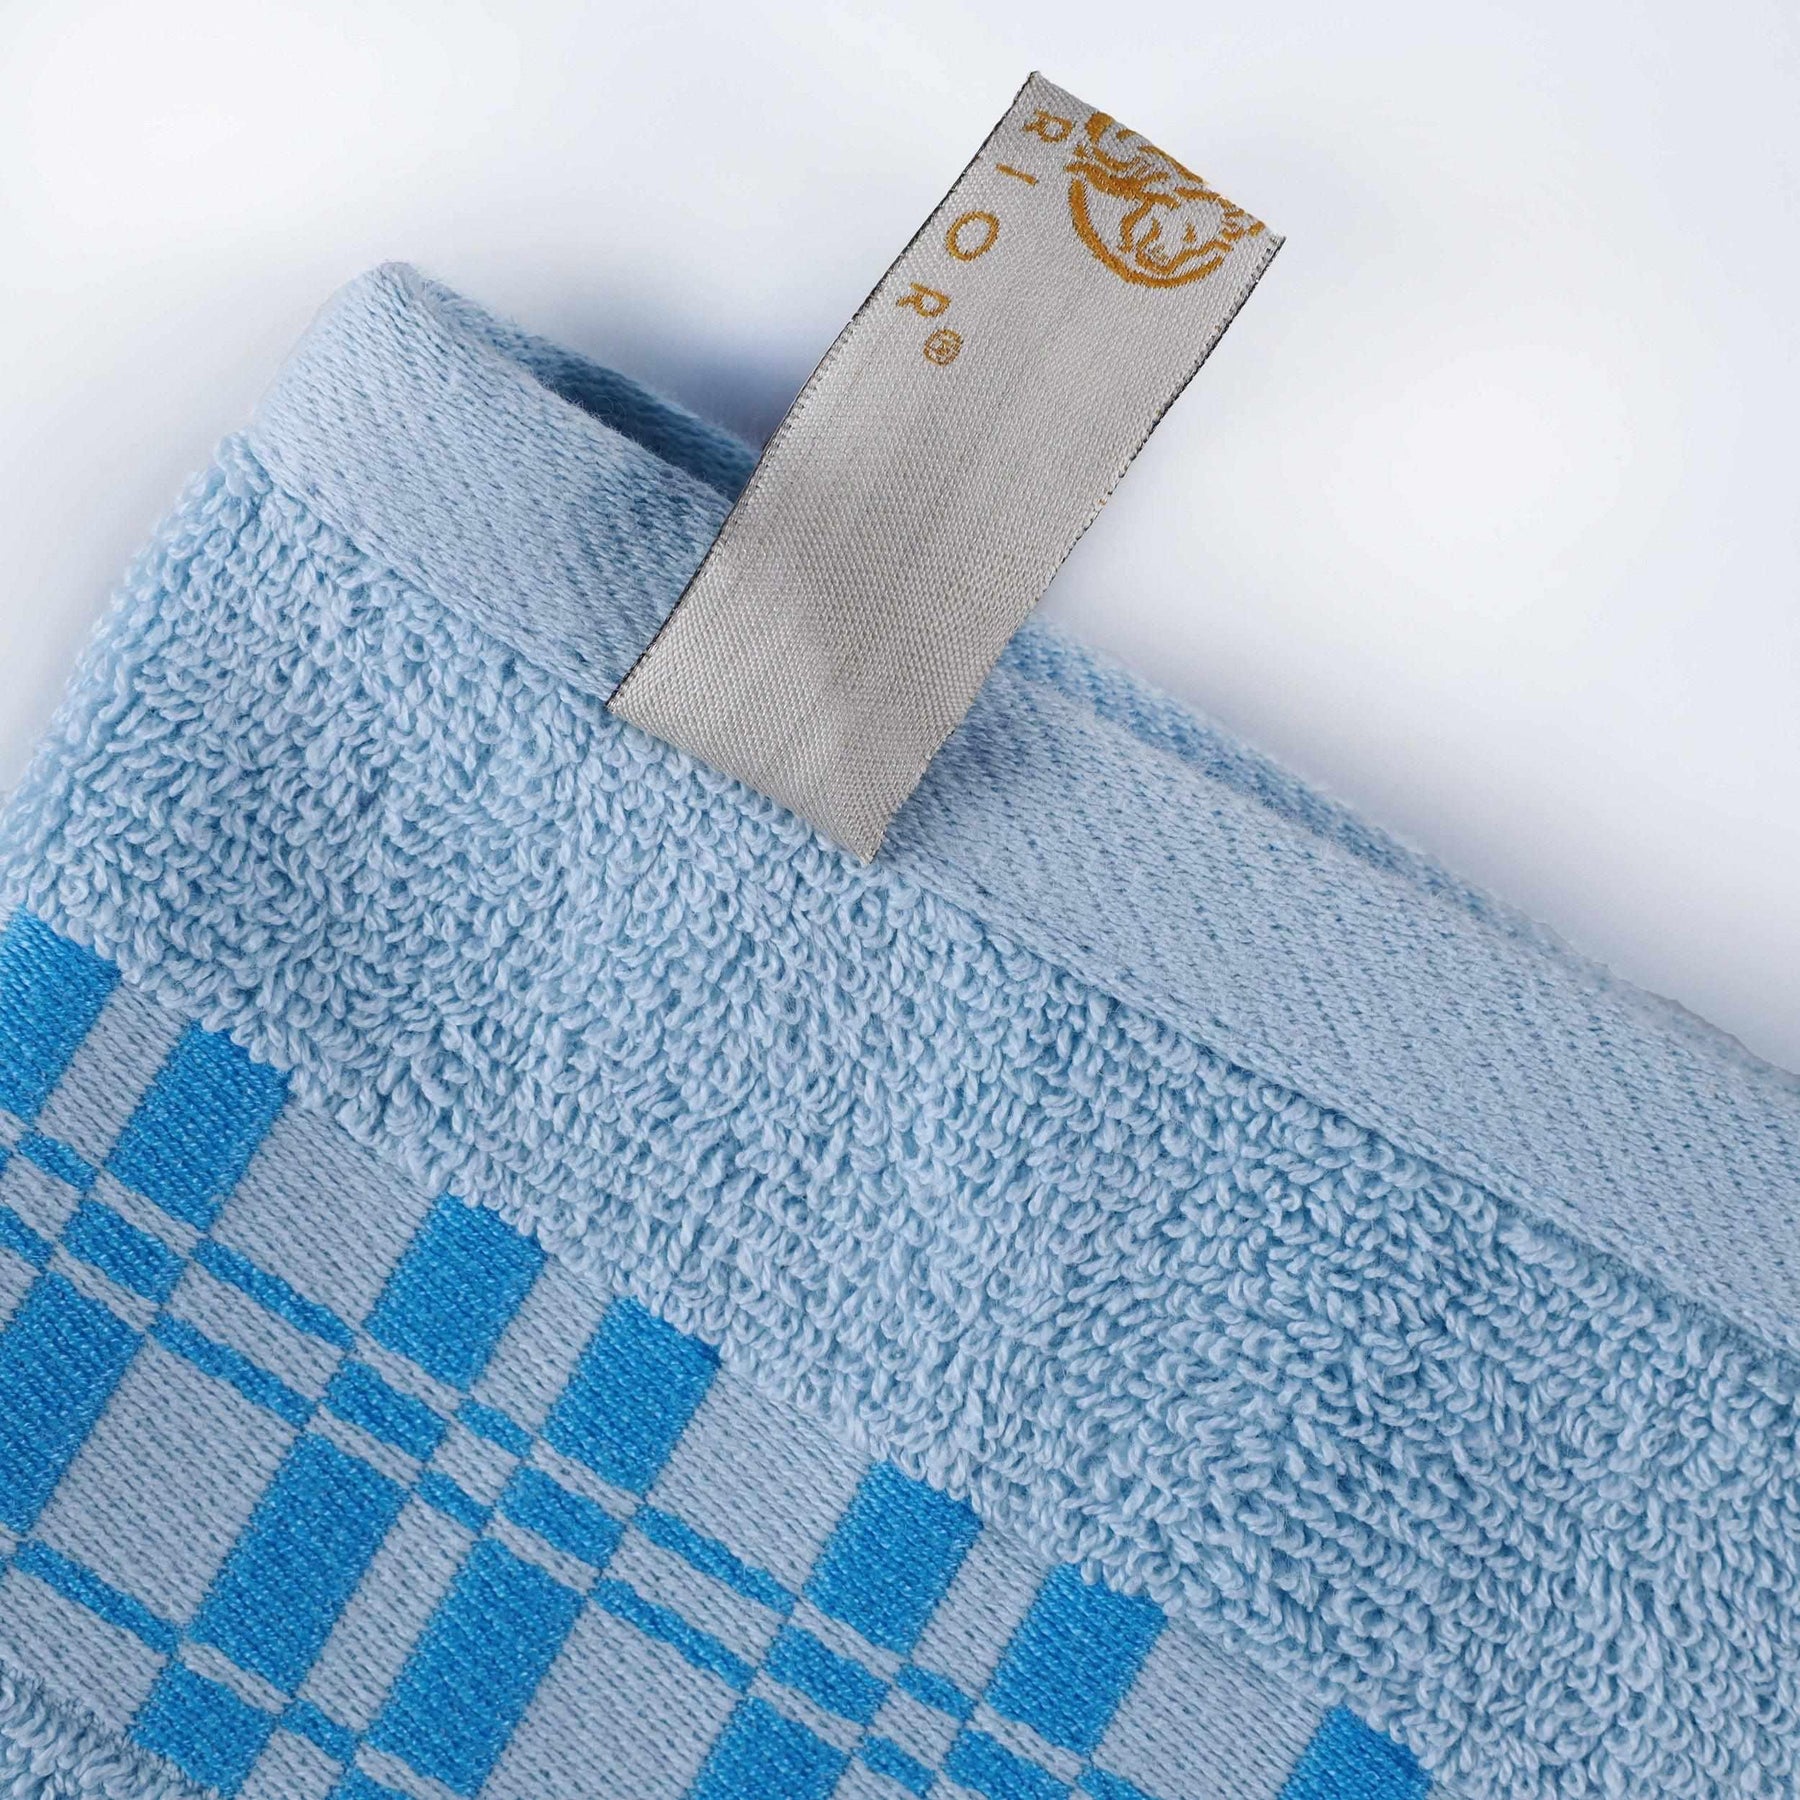  Superior Larissa Cotton 8-Piece Assorted Towel Set with Geometric Embroidered Jacquard Border - Light Blue